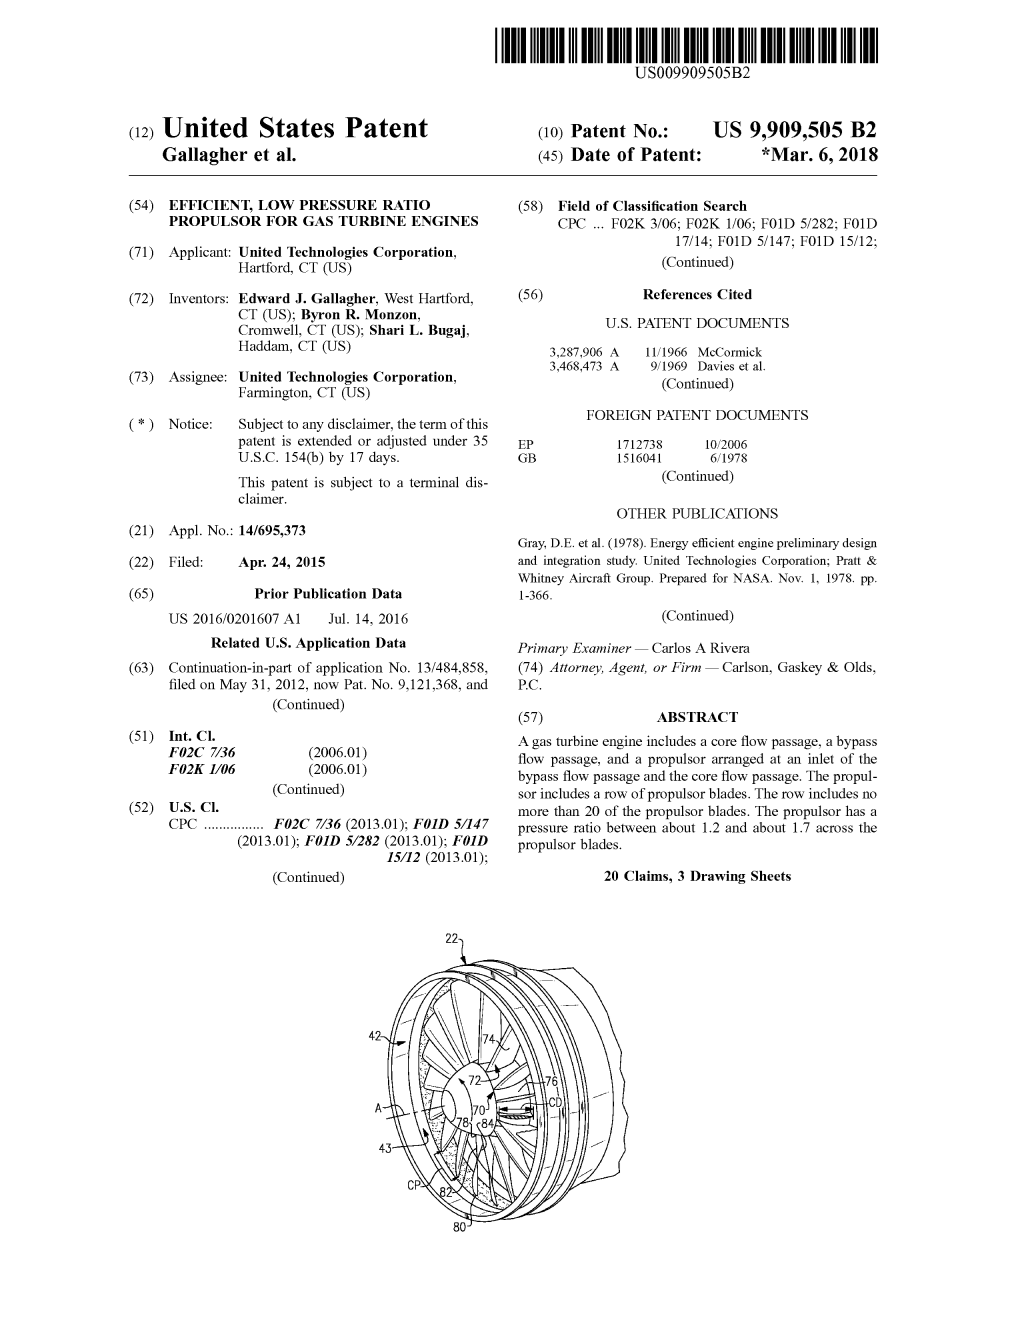 United States Patent (Io) Patent No.: US 9,909,505 B2 Gallagher Et Al